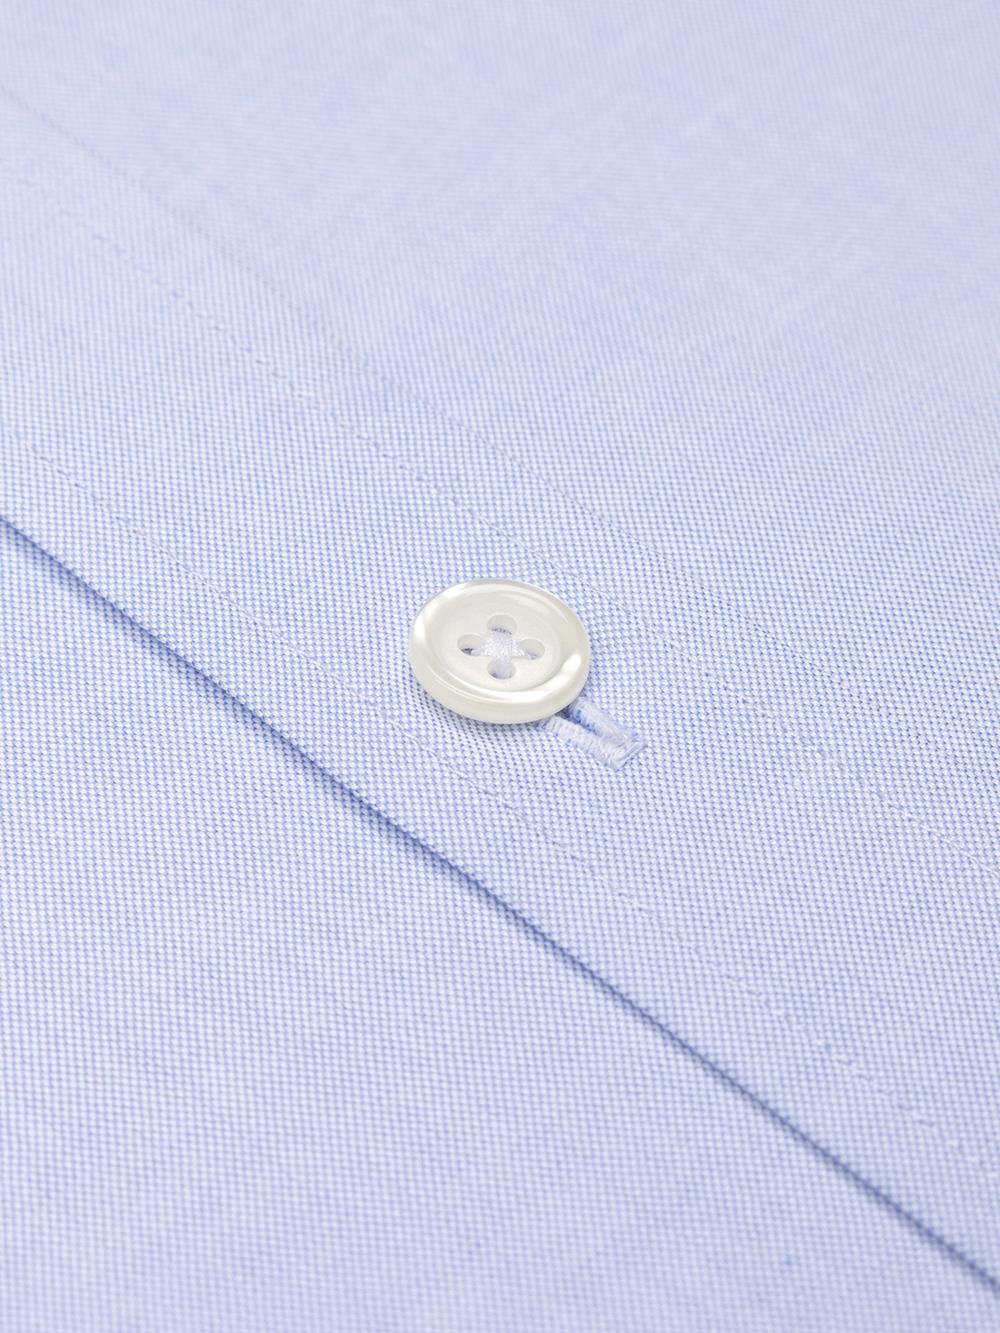 Sky pin point shirt  - Button down collar